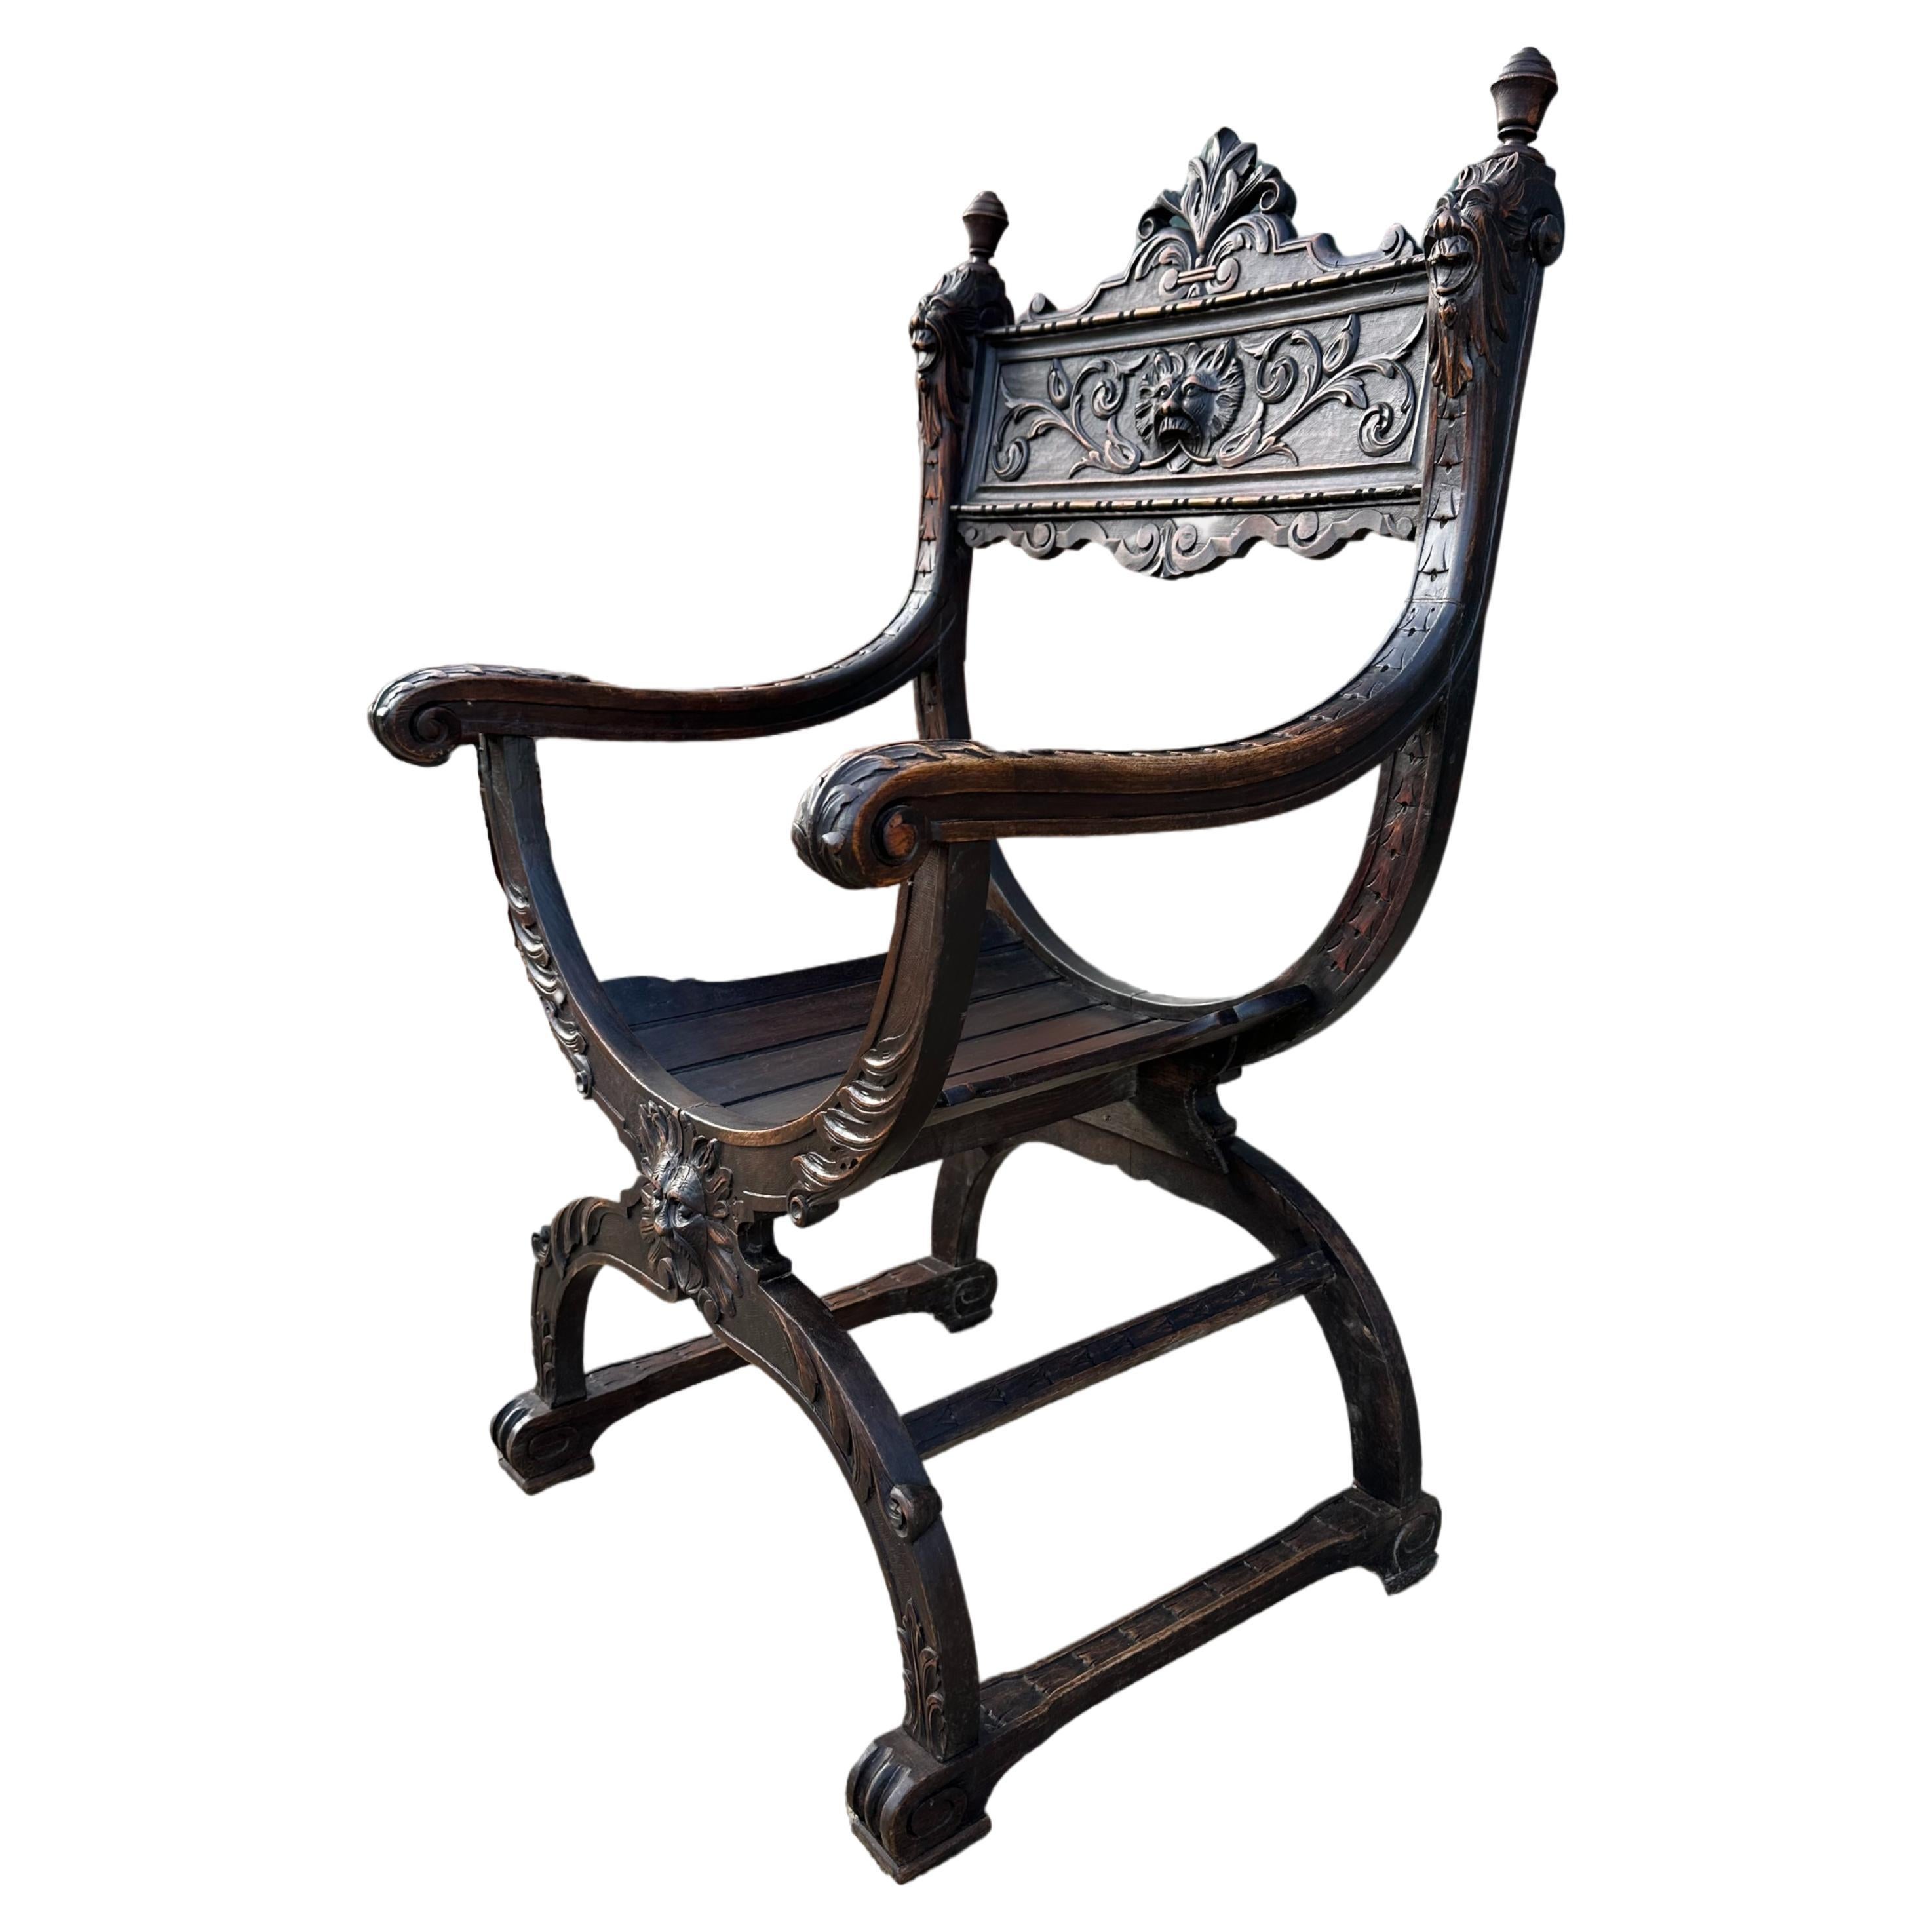 Antique Italian Curule/ Savonarola Carved Renaissance Revival Chair.